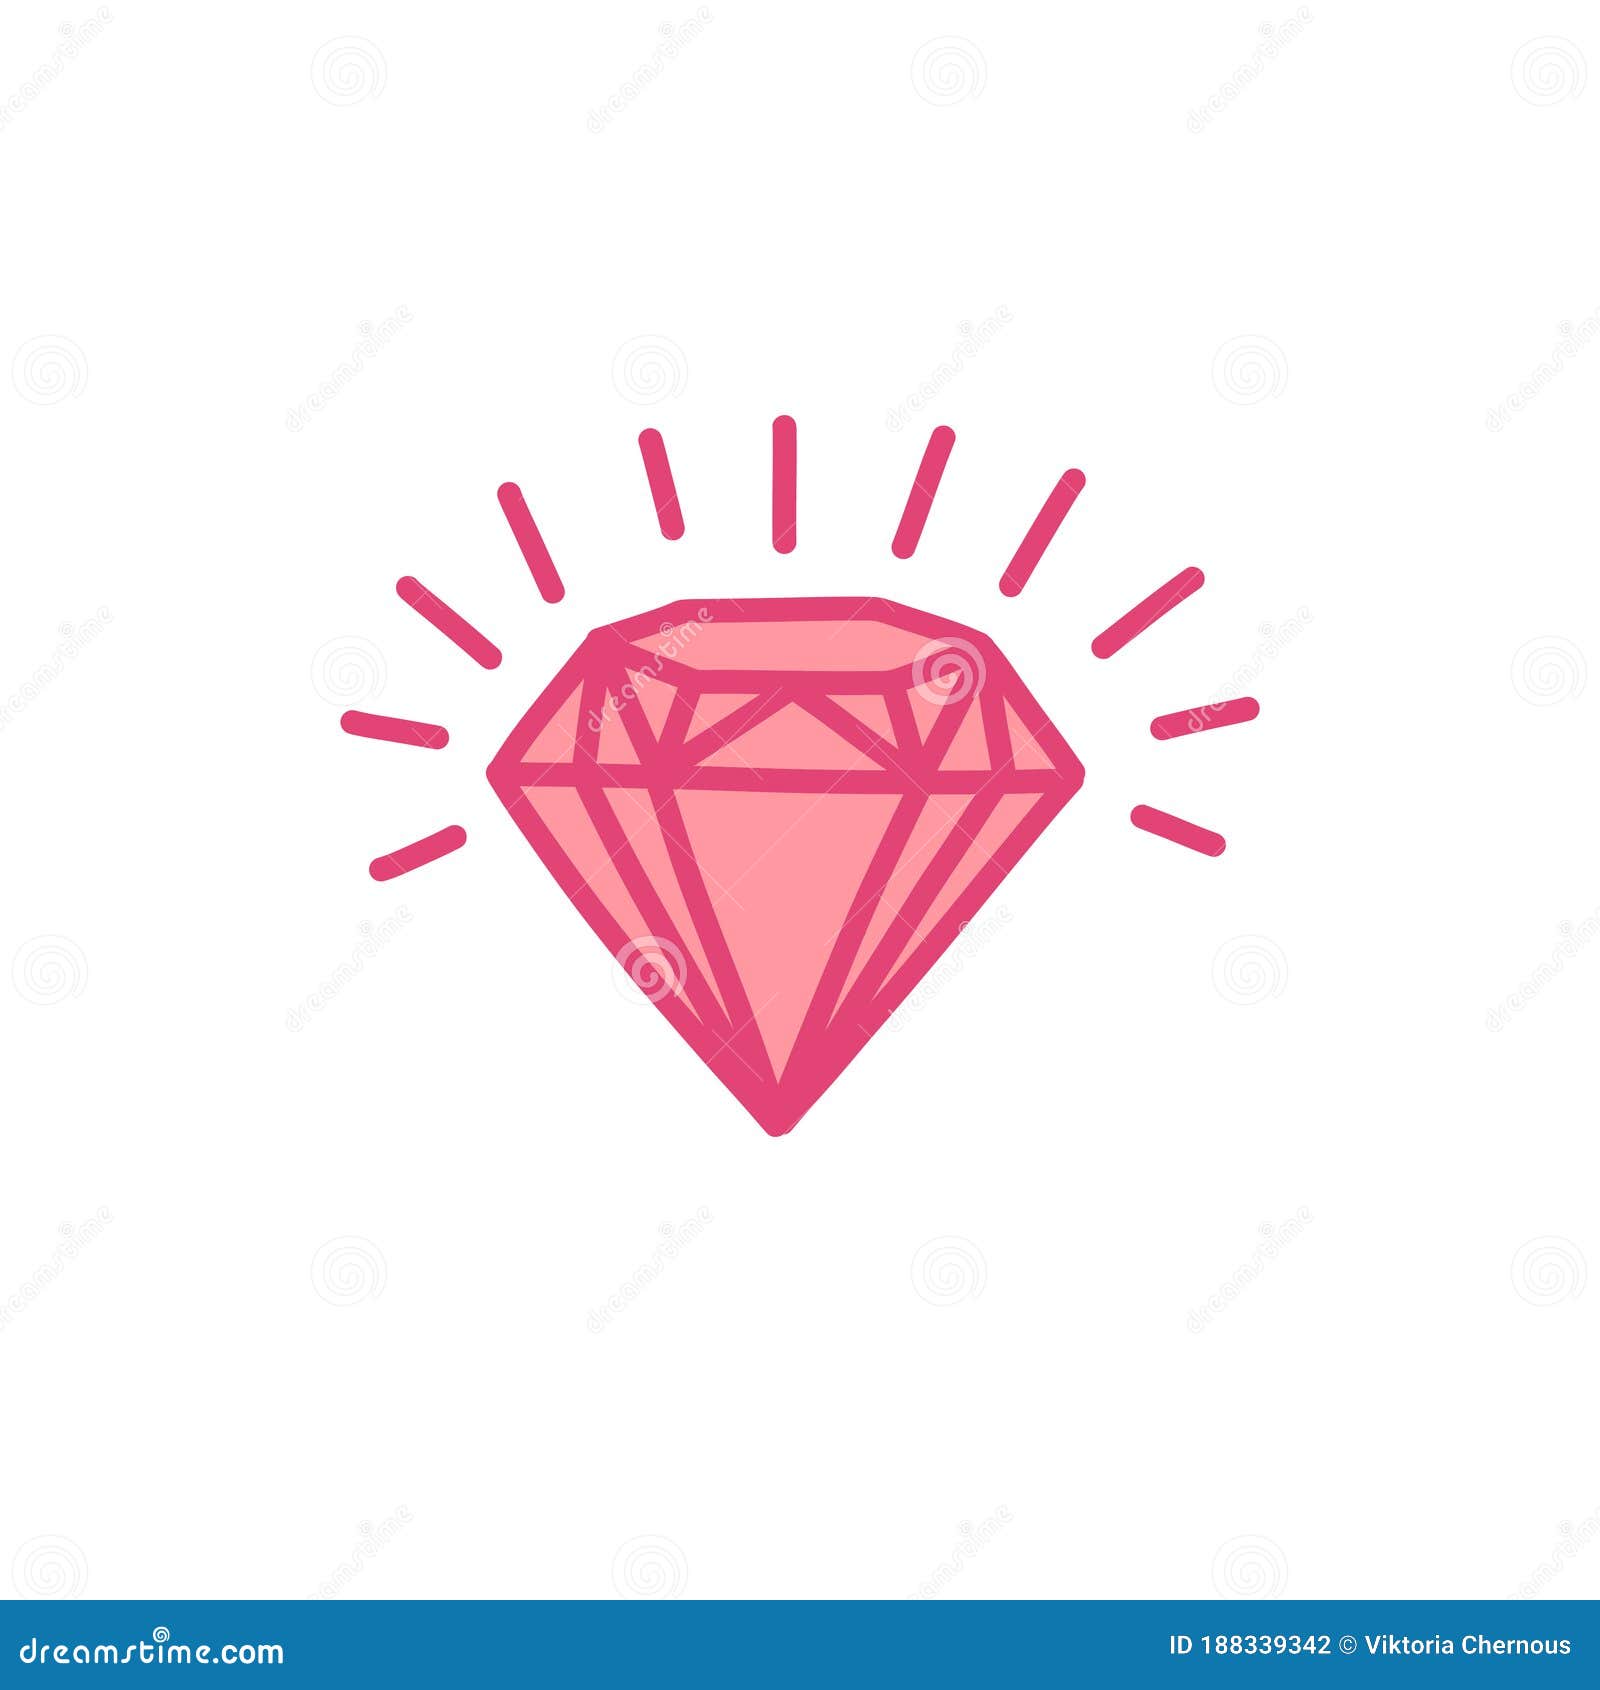 cute diamond